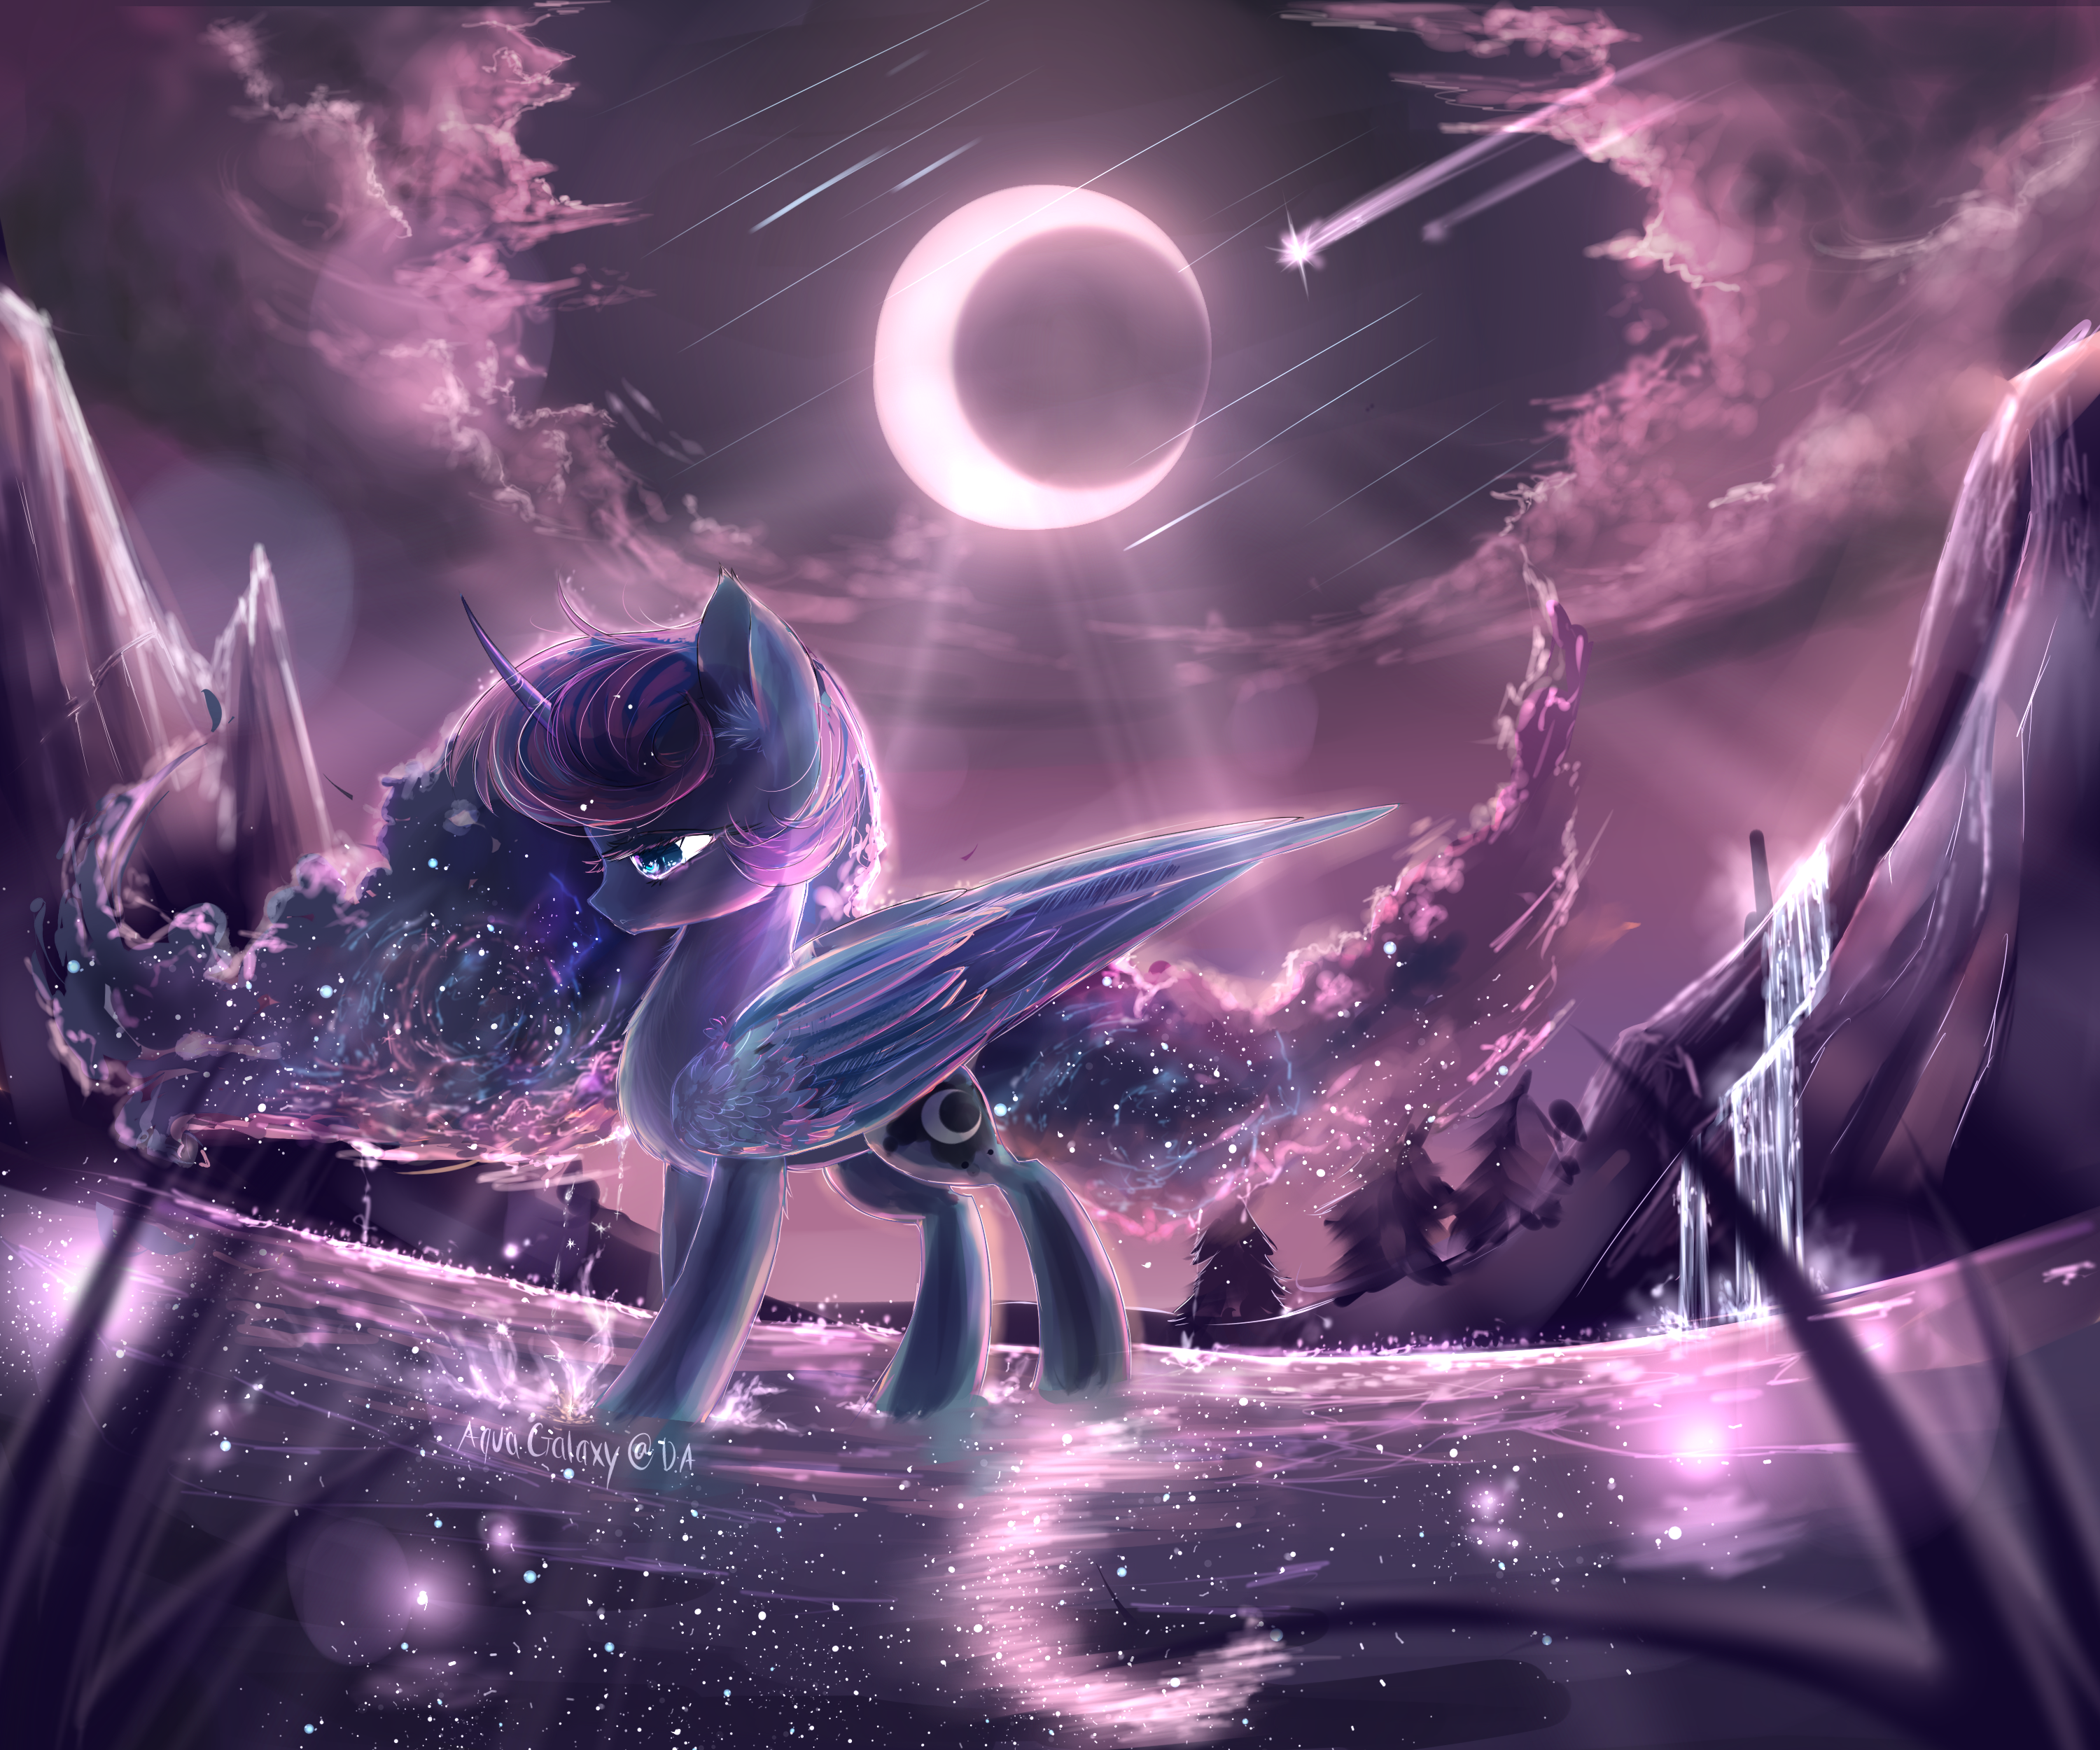 Princess Luna by AquaGalaxy